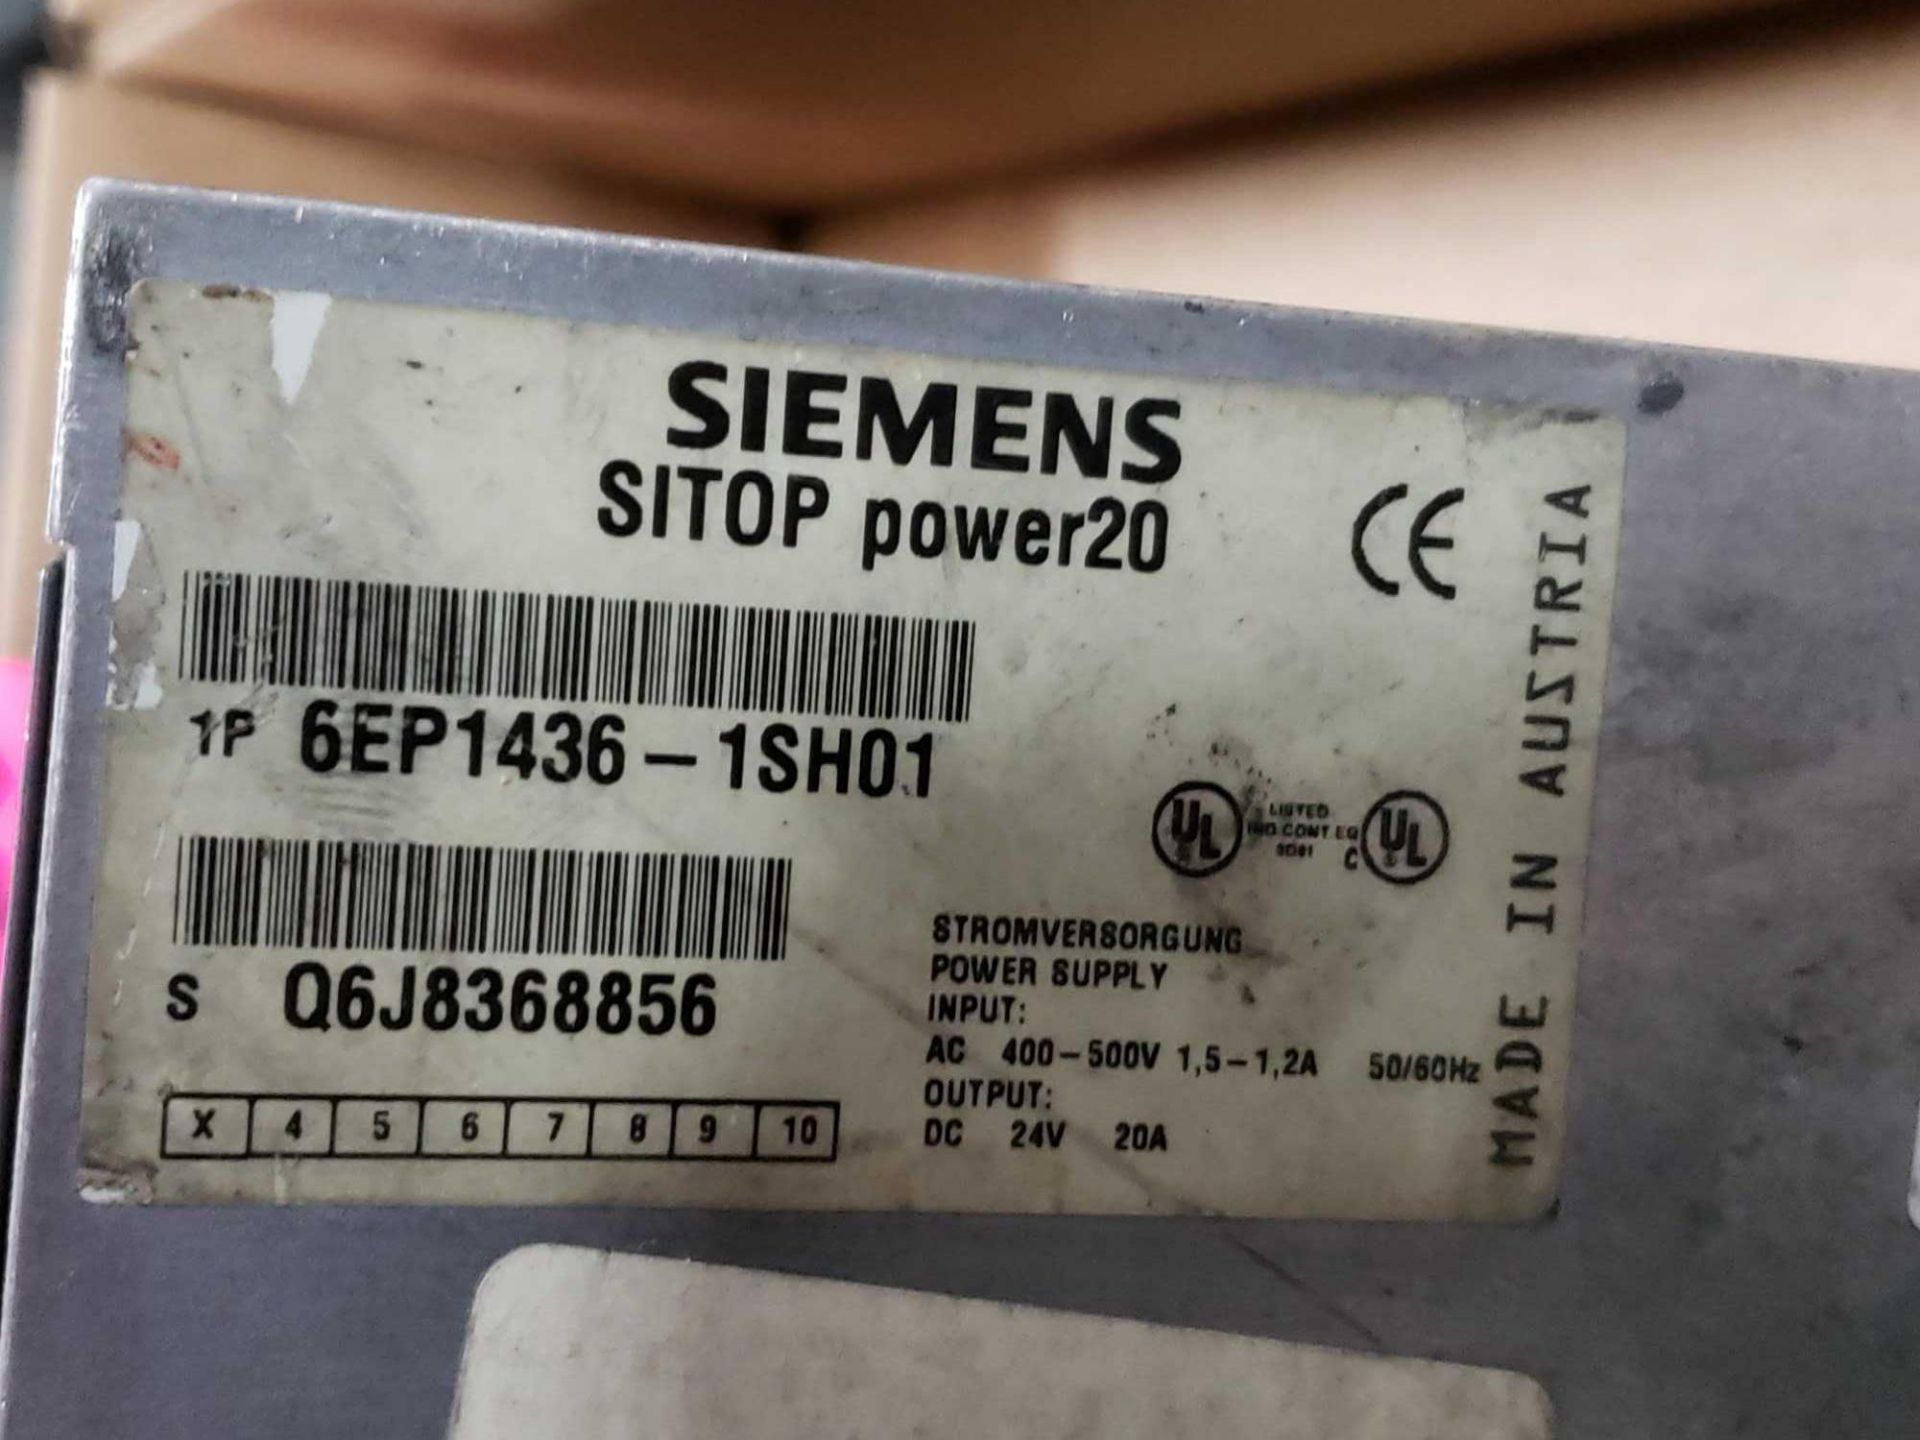 Siemens Sitop power supply model 6EP1436-1SH01. - Image 3 of 3